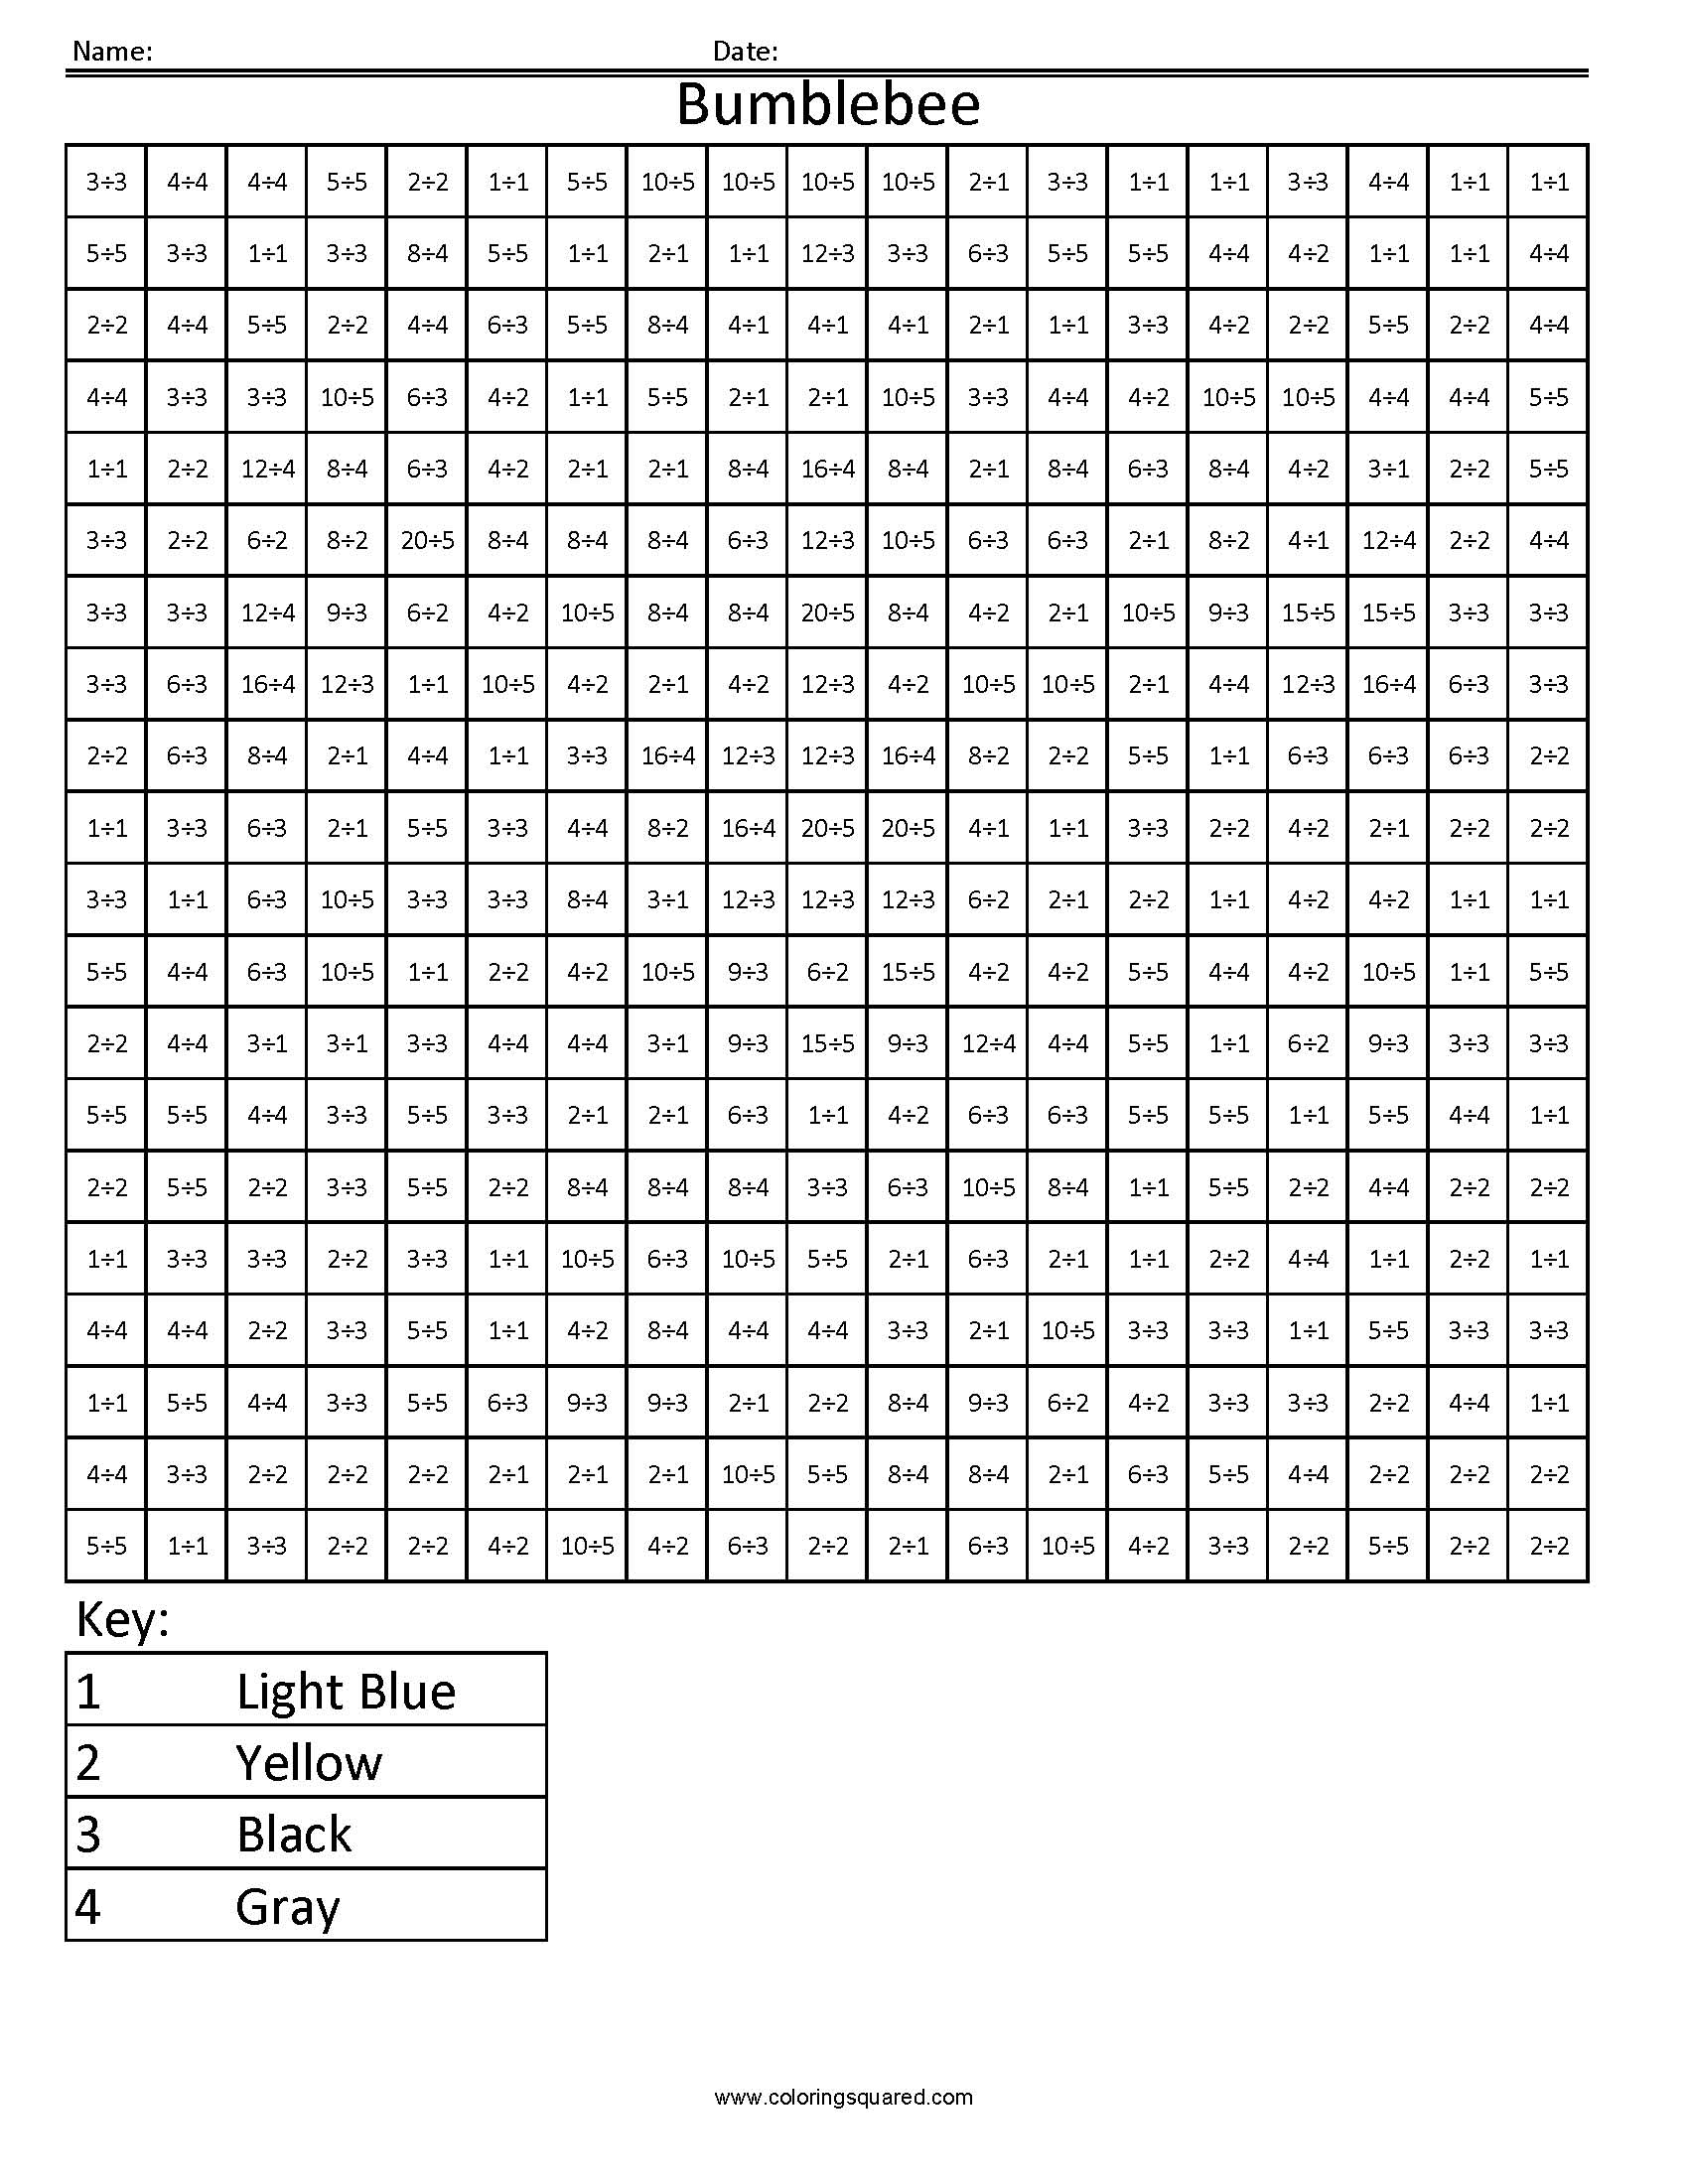 Coloring Squared Multiplication Worksheets